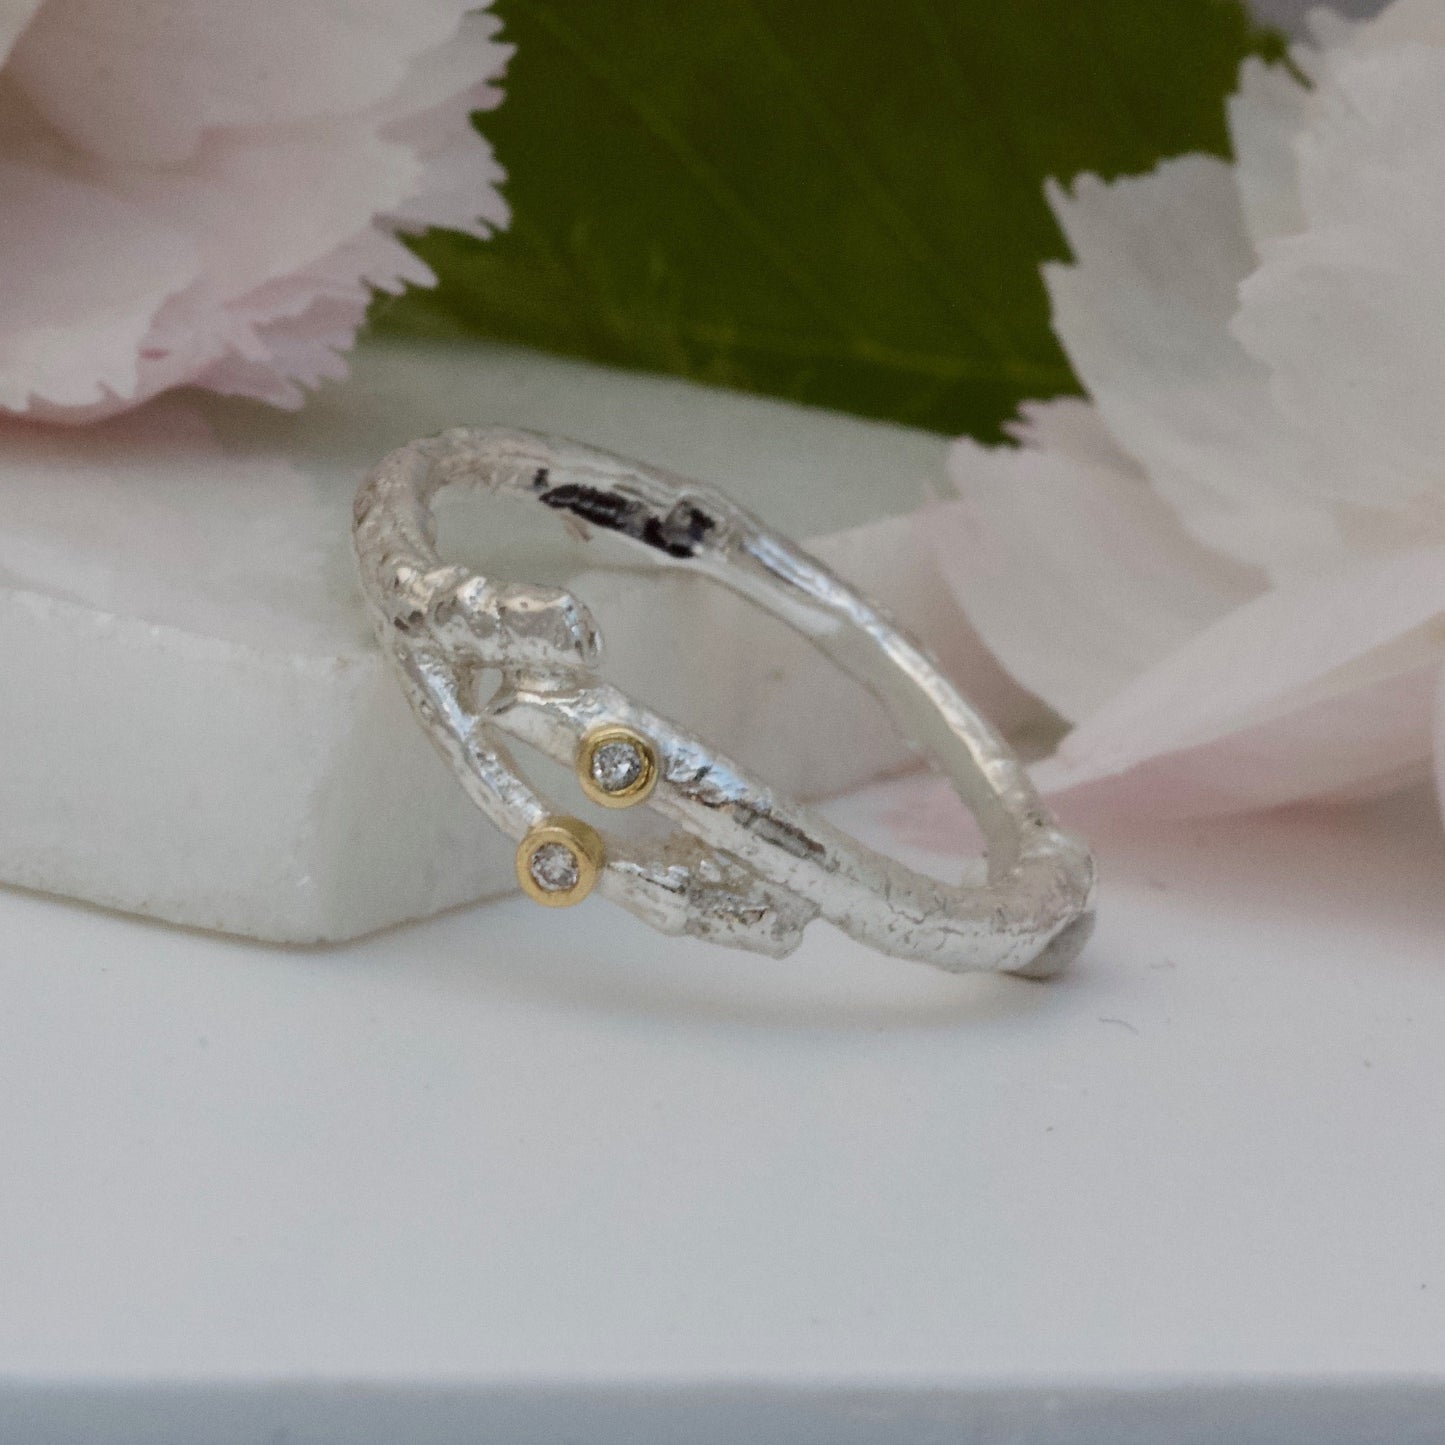 Diamond Twig Wedding Ring, Forked Silver Elvish Twig Ring, Alternative Wedding Ring